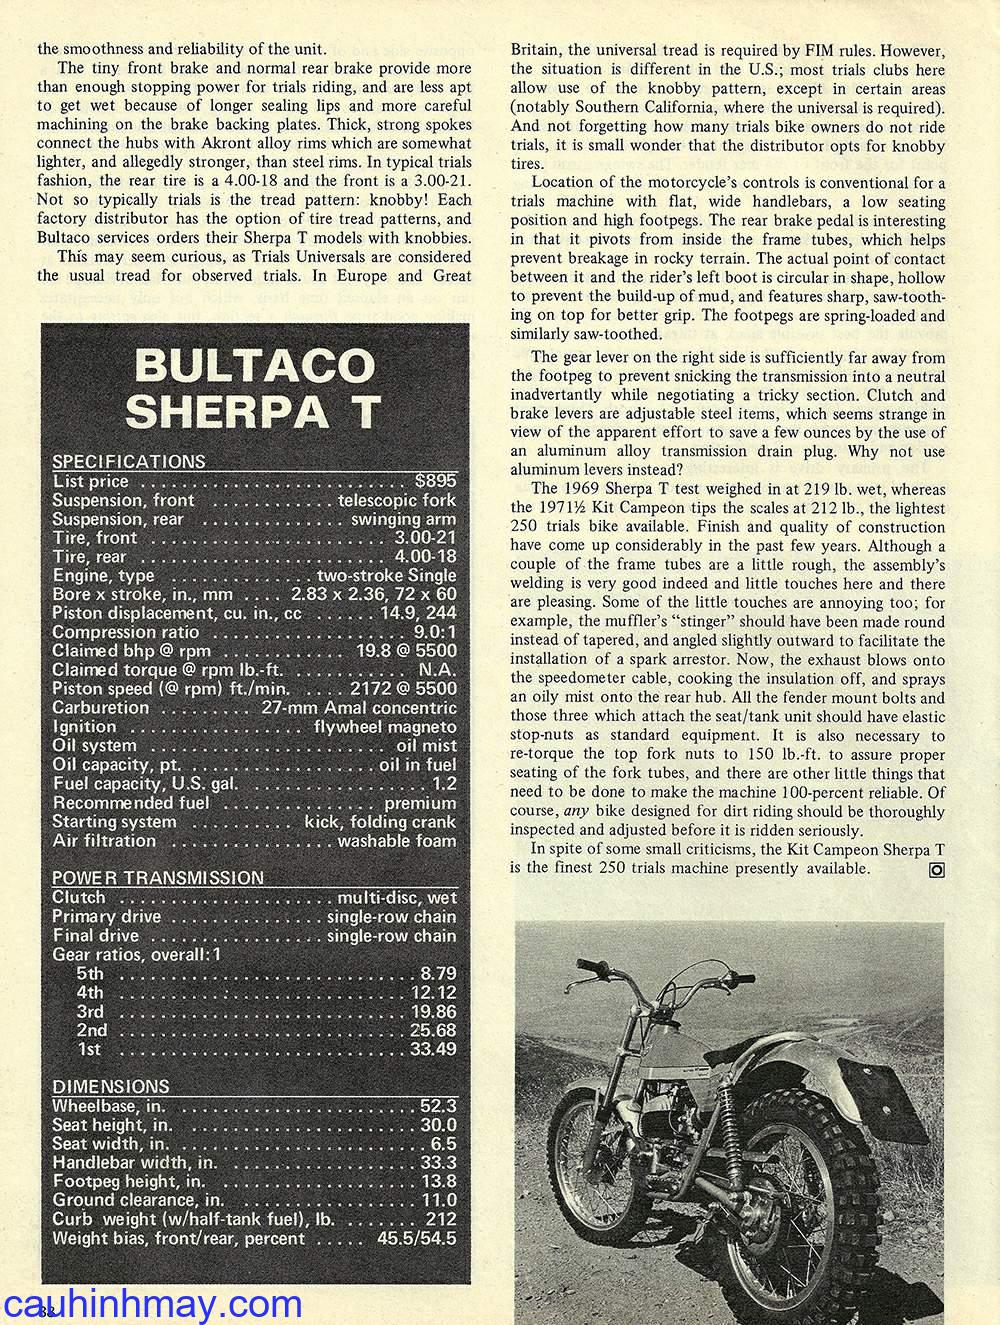 1971 BULTACO SHERPA T250 - cauhinhmay.com